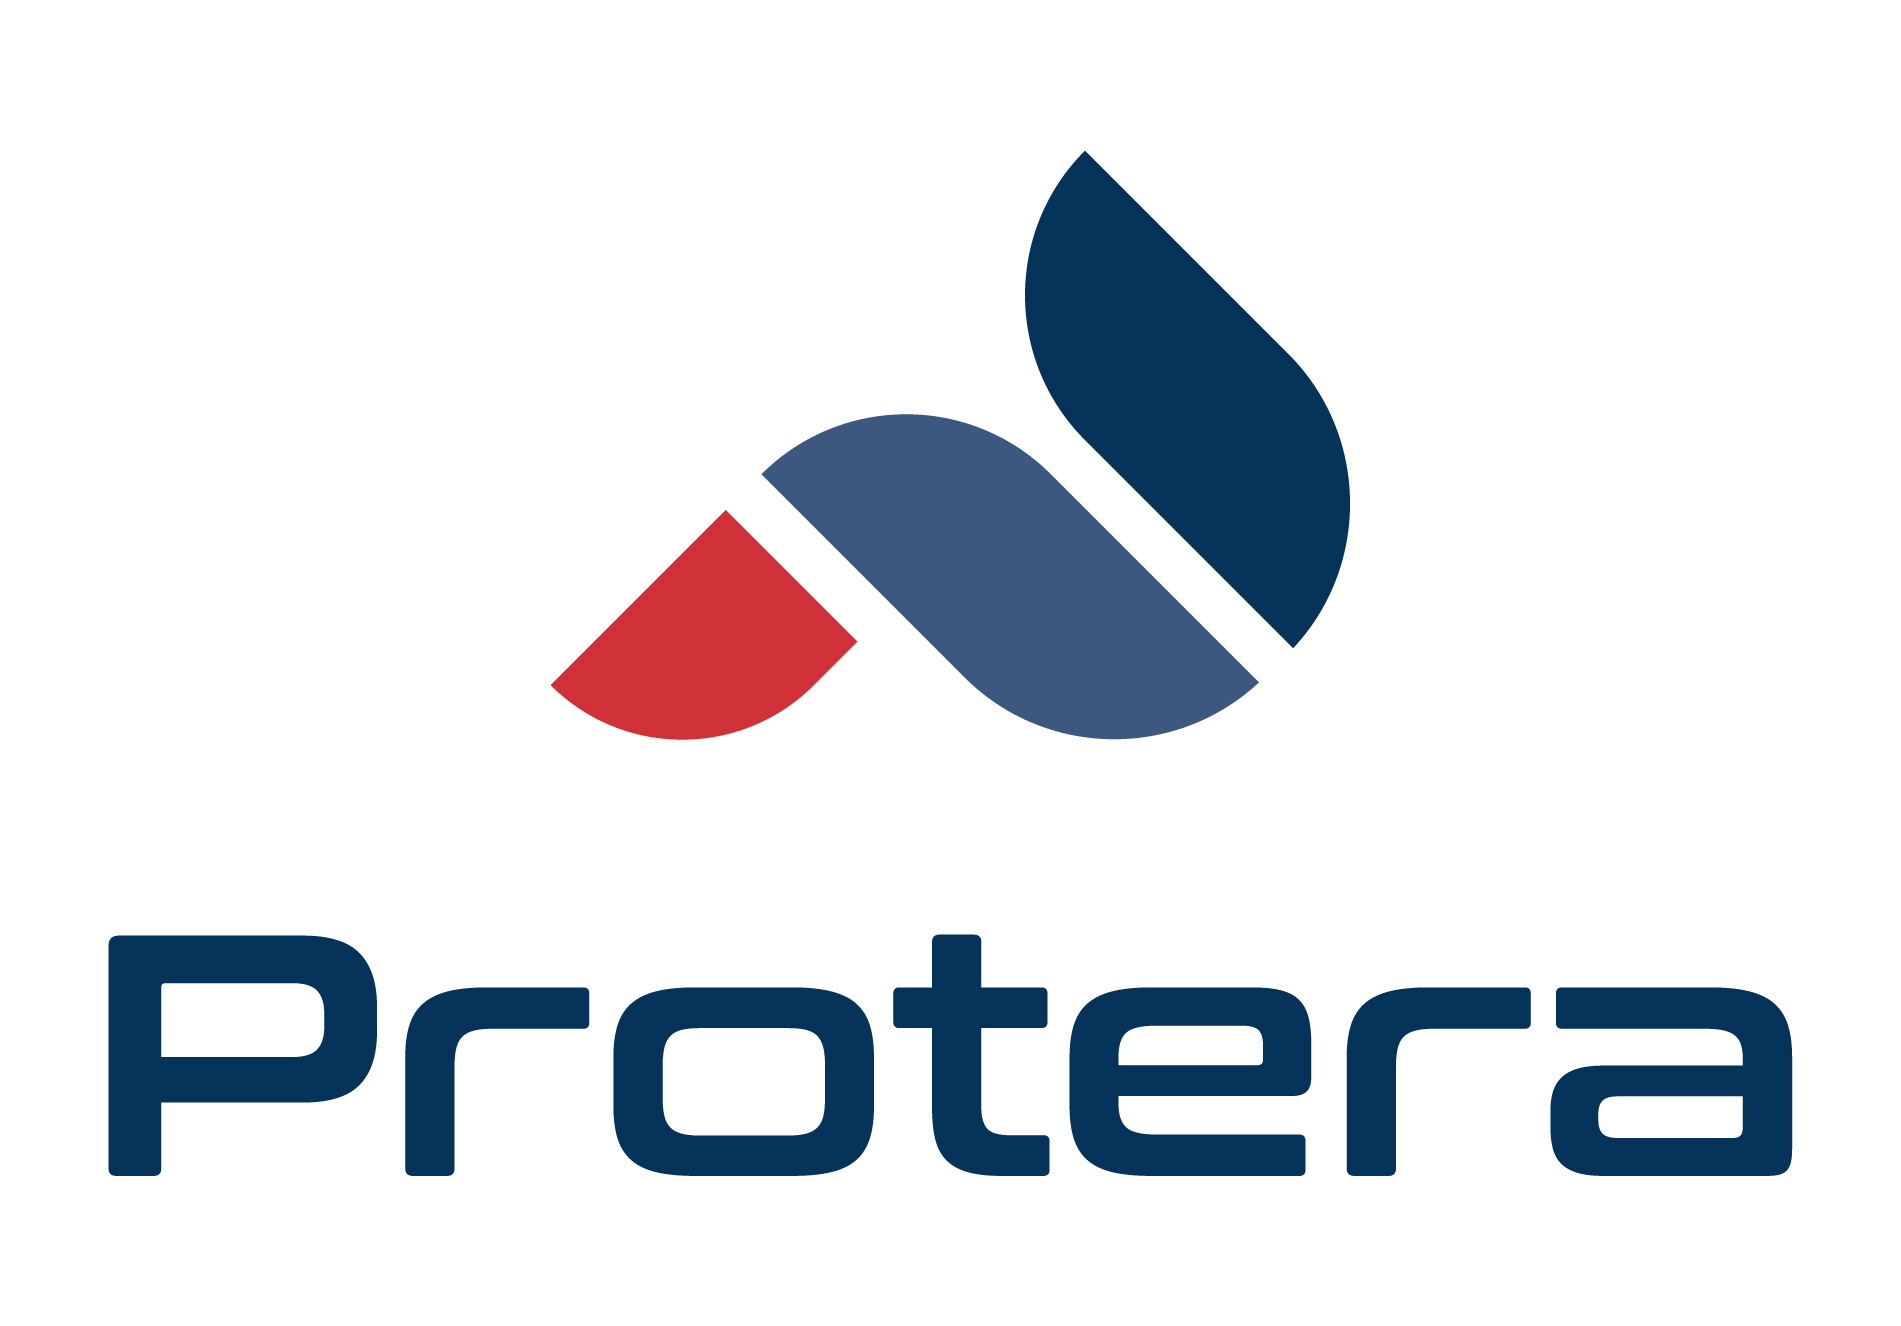 Protera Technologies